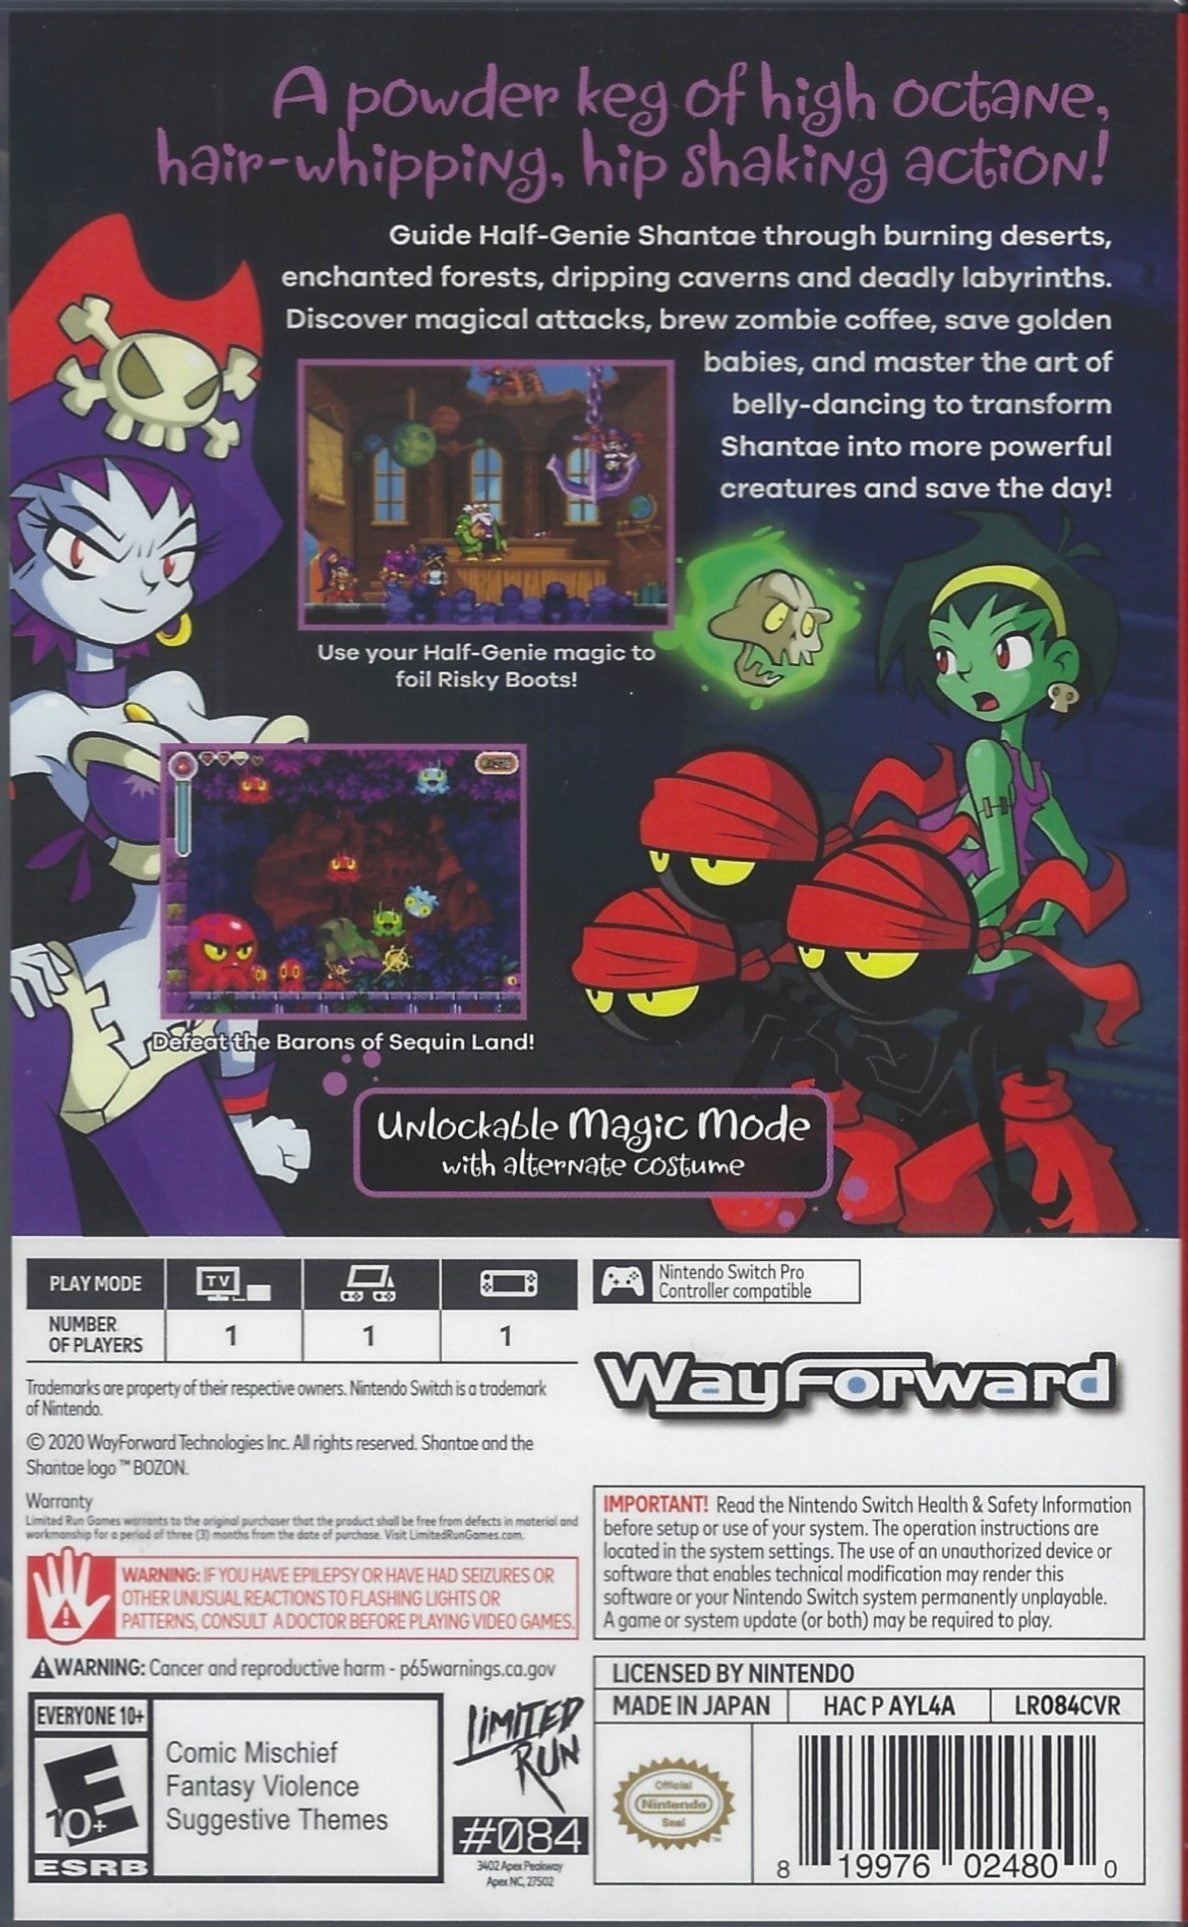 Shantae Risky's Revenge (Limited Run #084) - (NSW) Nintendo Switch Video Games Limited Run Games   